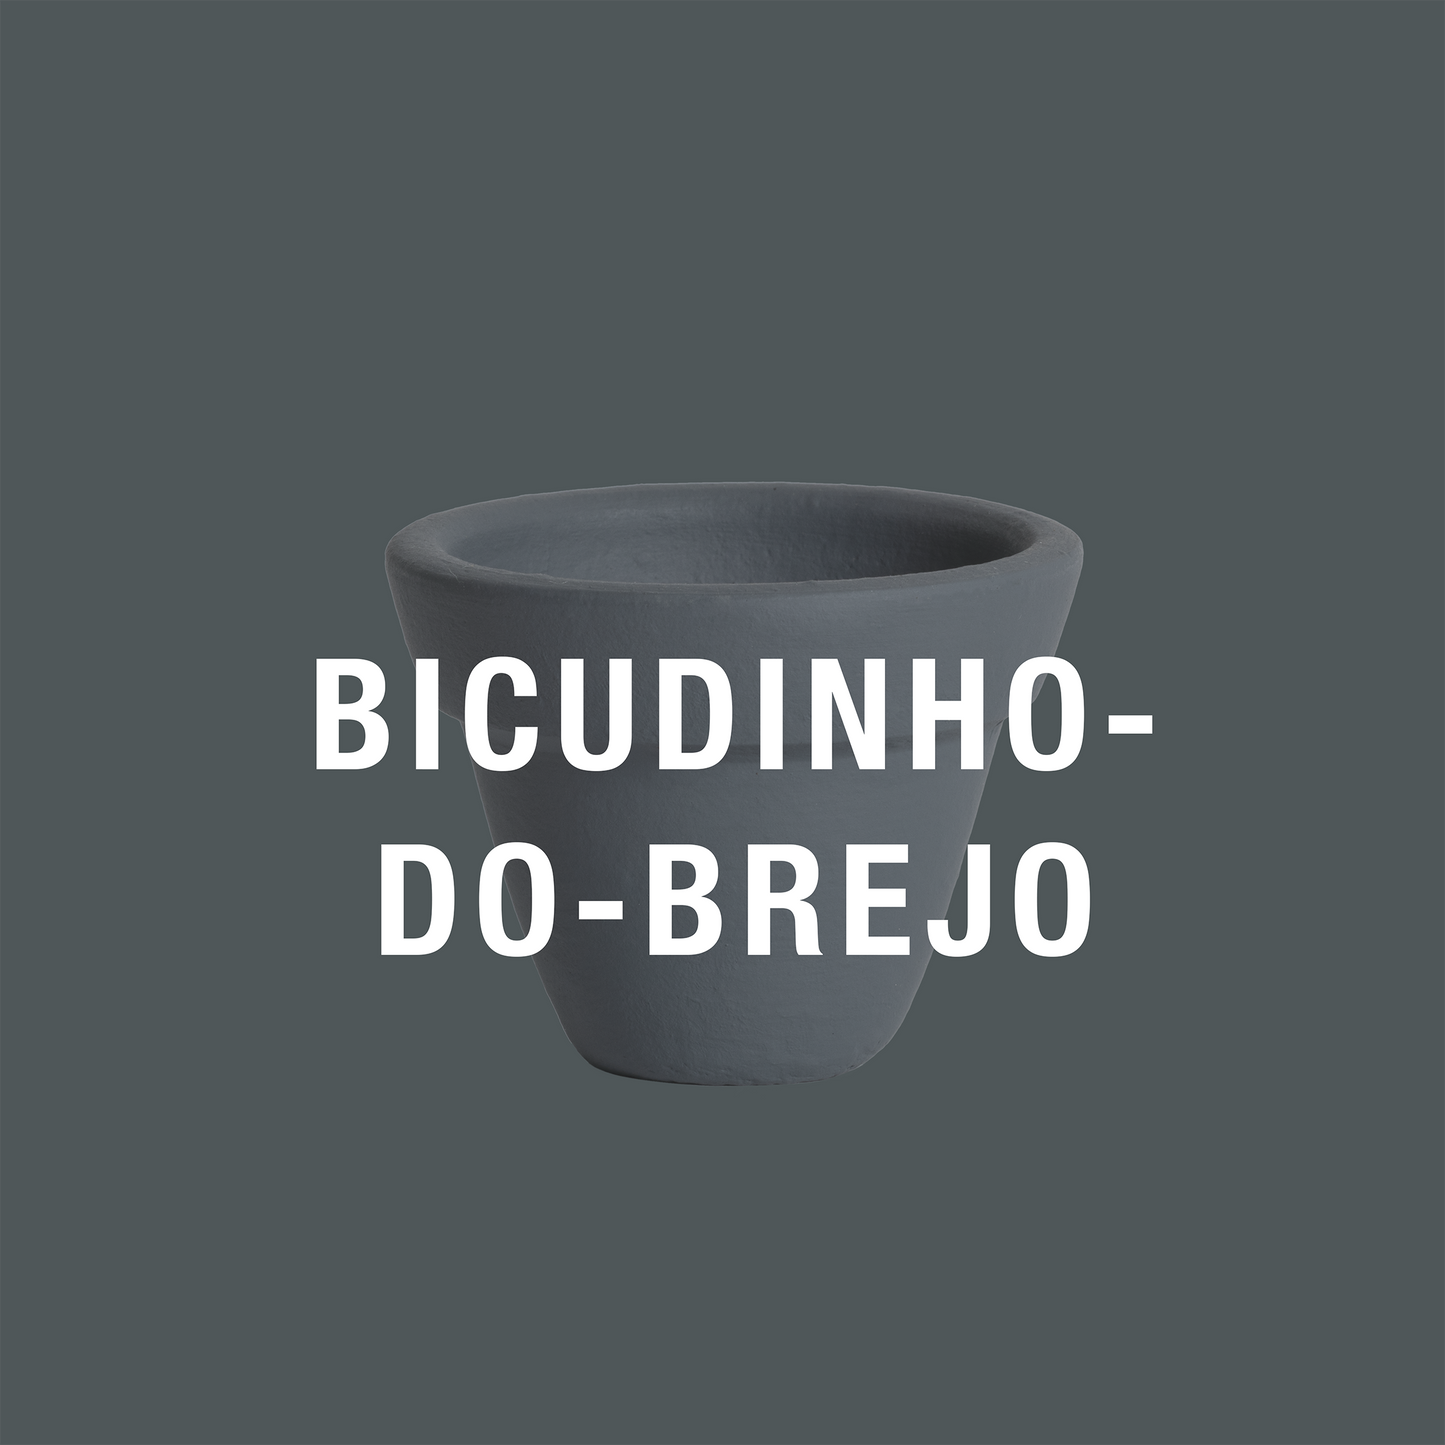 Bicudinho-do-brejo-paulista